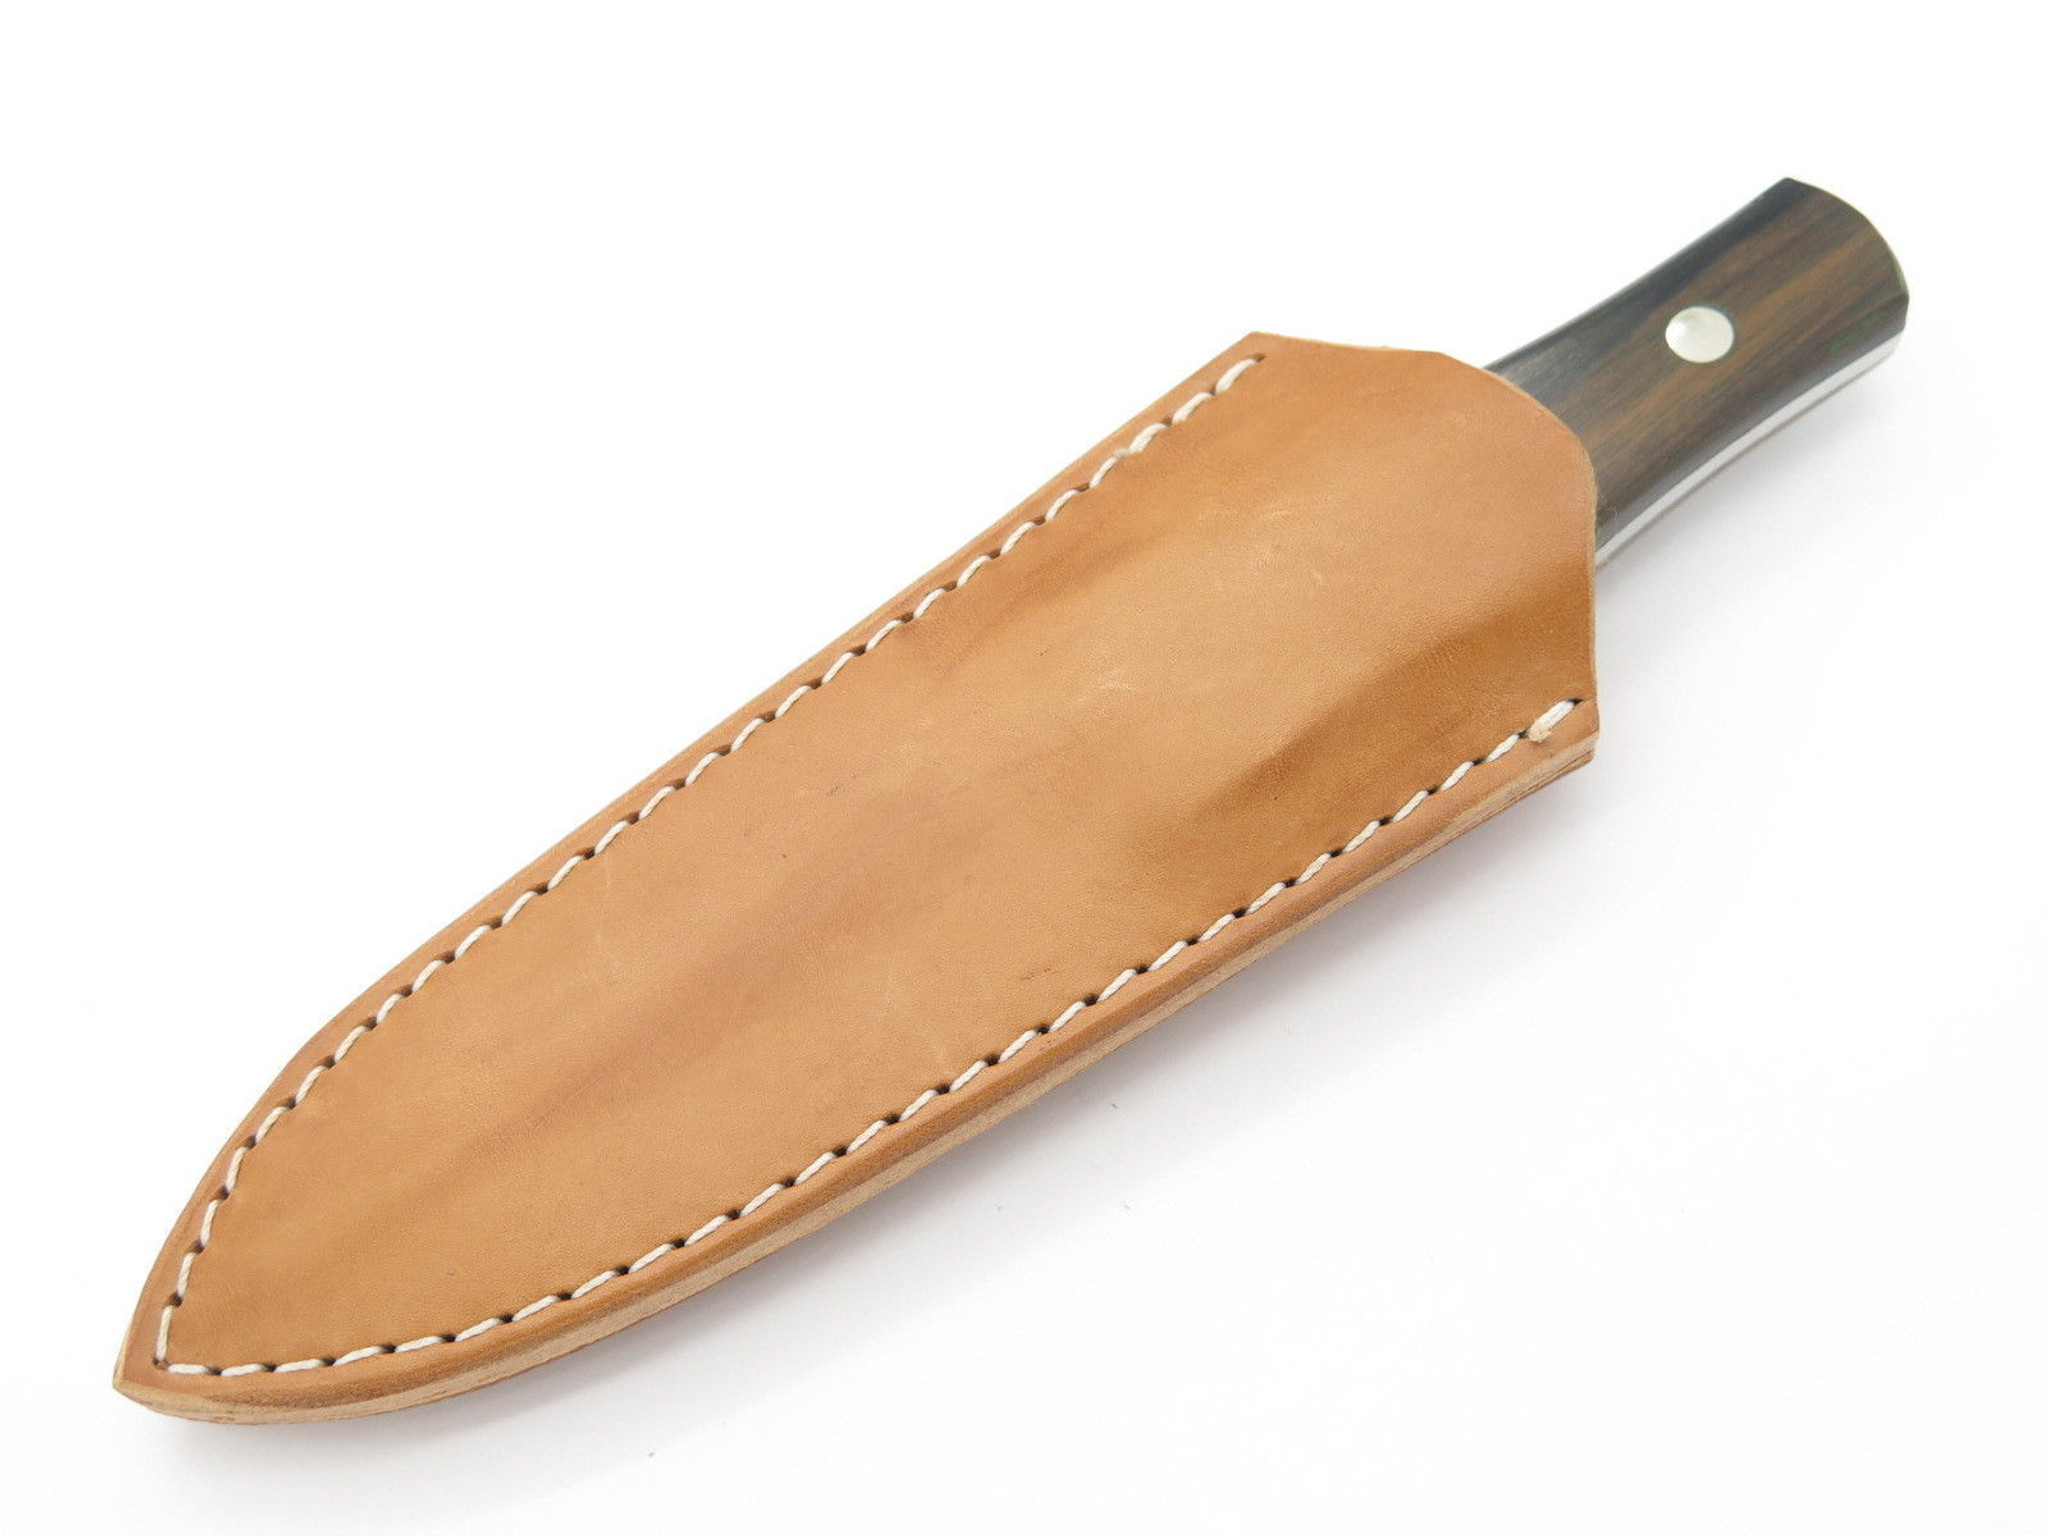 Custom USA Brown Leather Fixed 4 Blade Dagger Knife Boot Belt